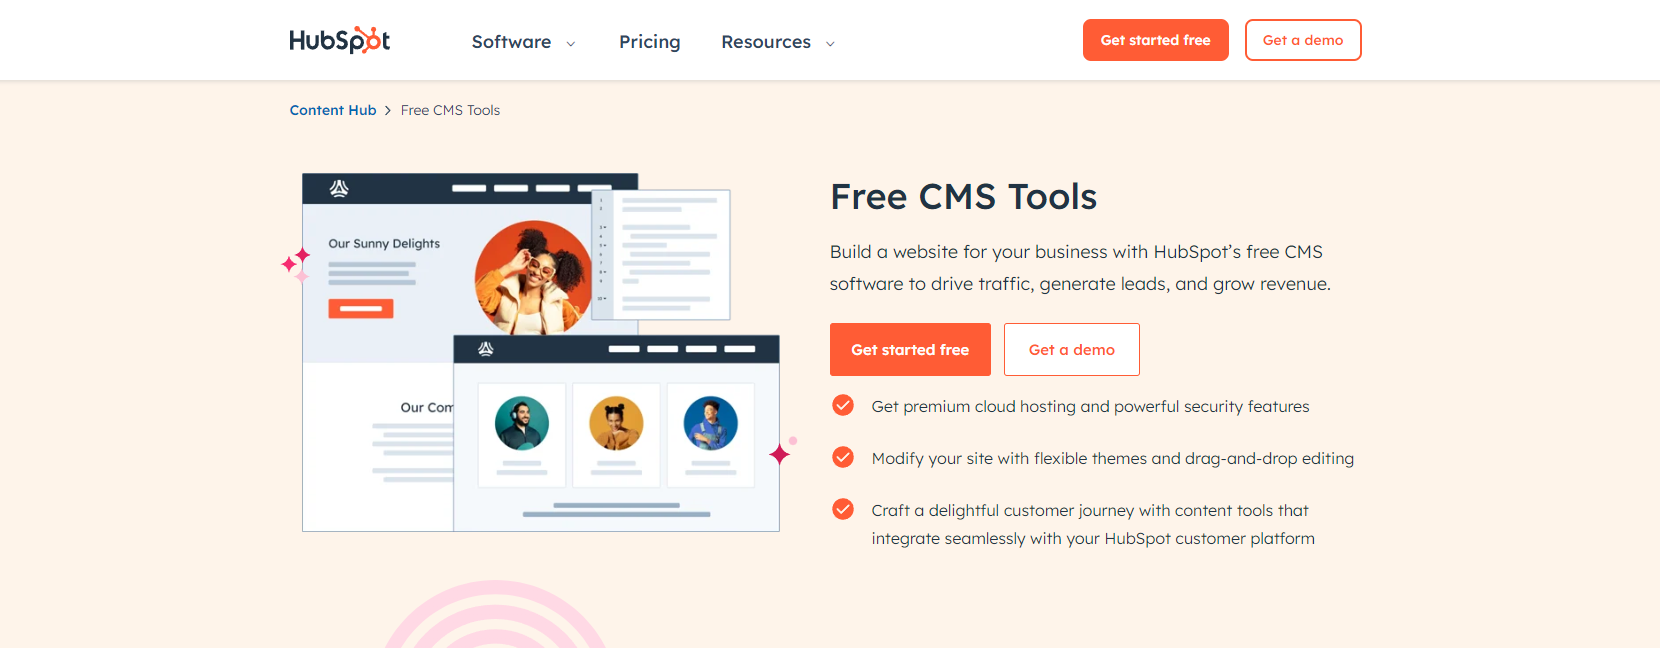 Hubspot Free CMS tool